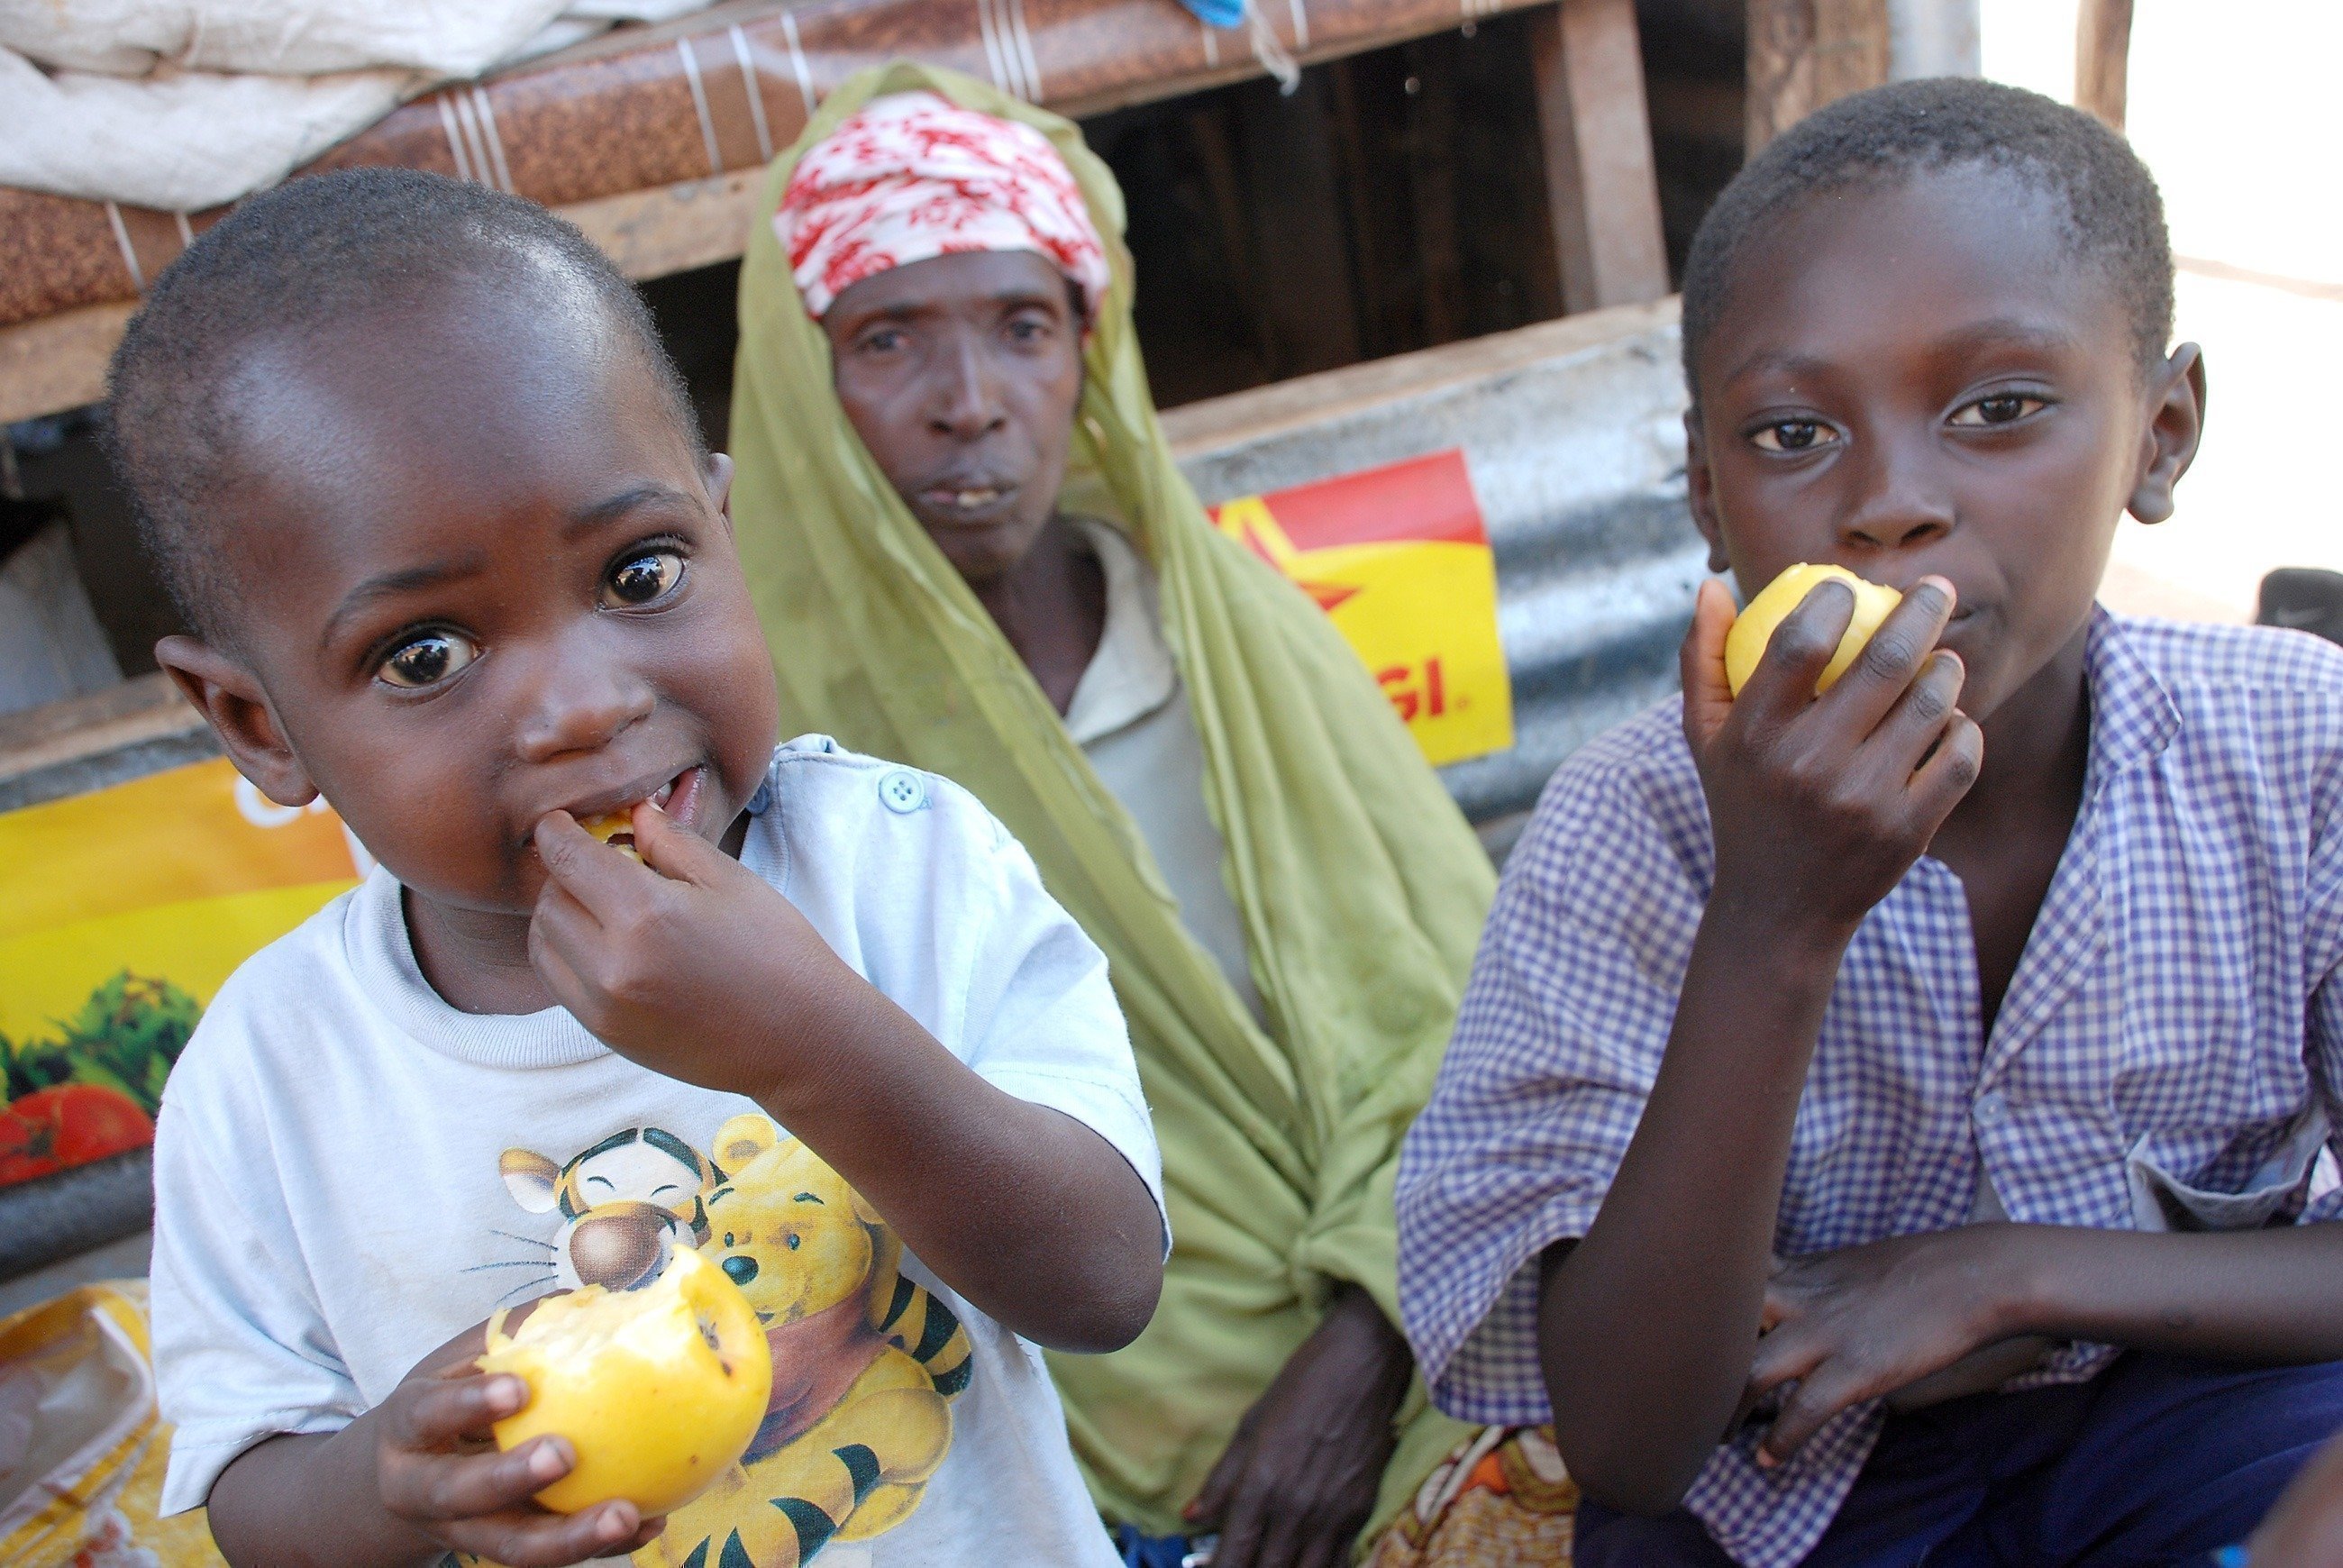 Afrikanische Kinder essen Äpfel.